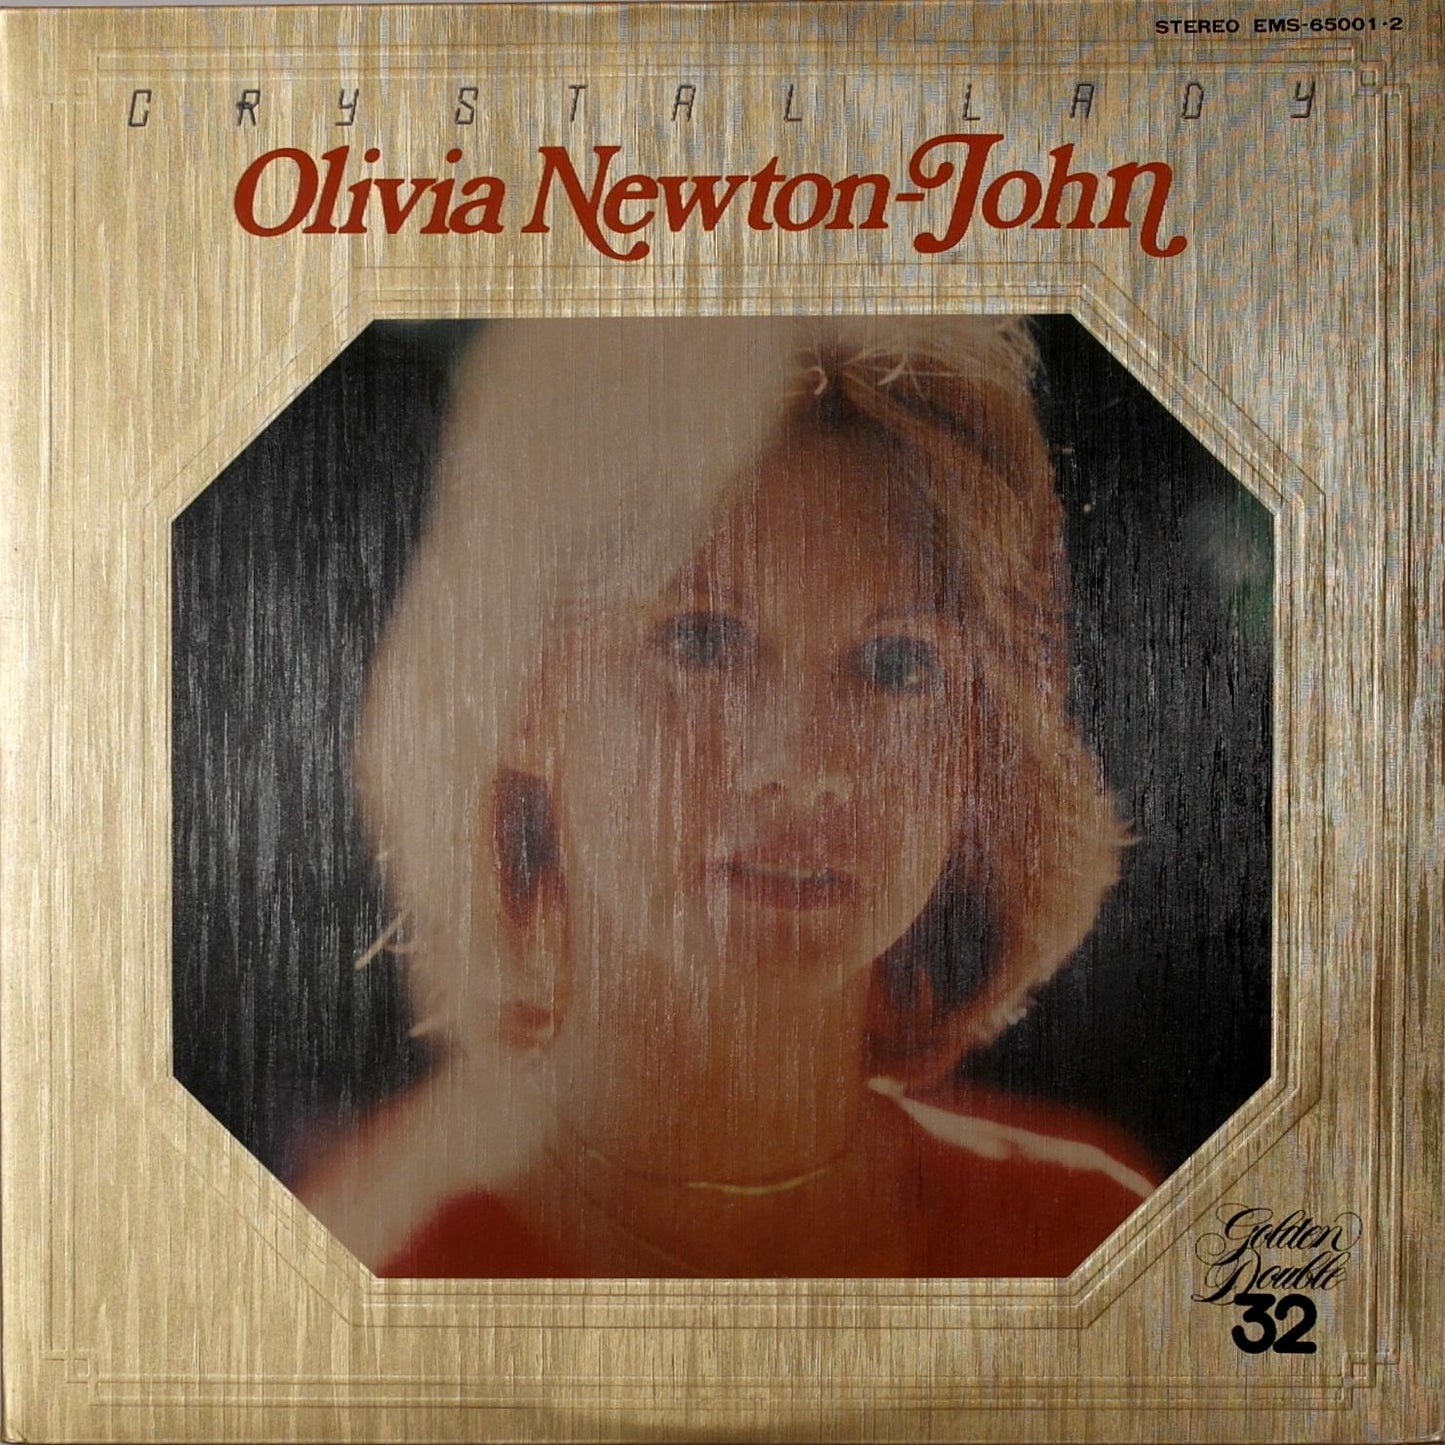 OLIVIA NEWTON-JOHN - Crystal Lady